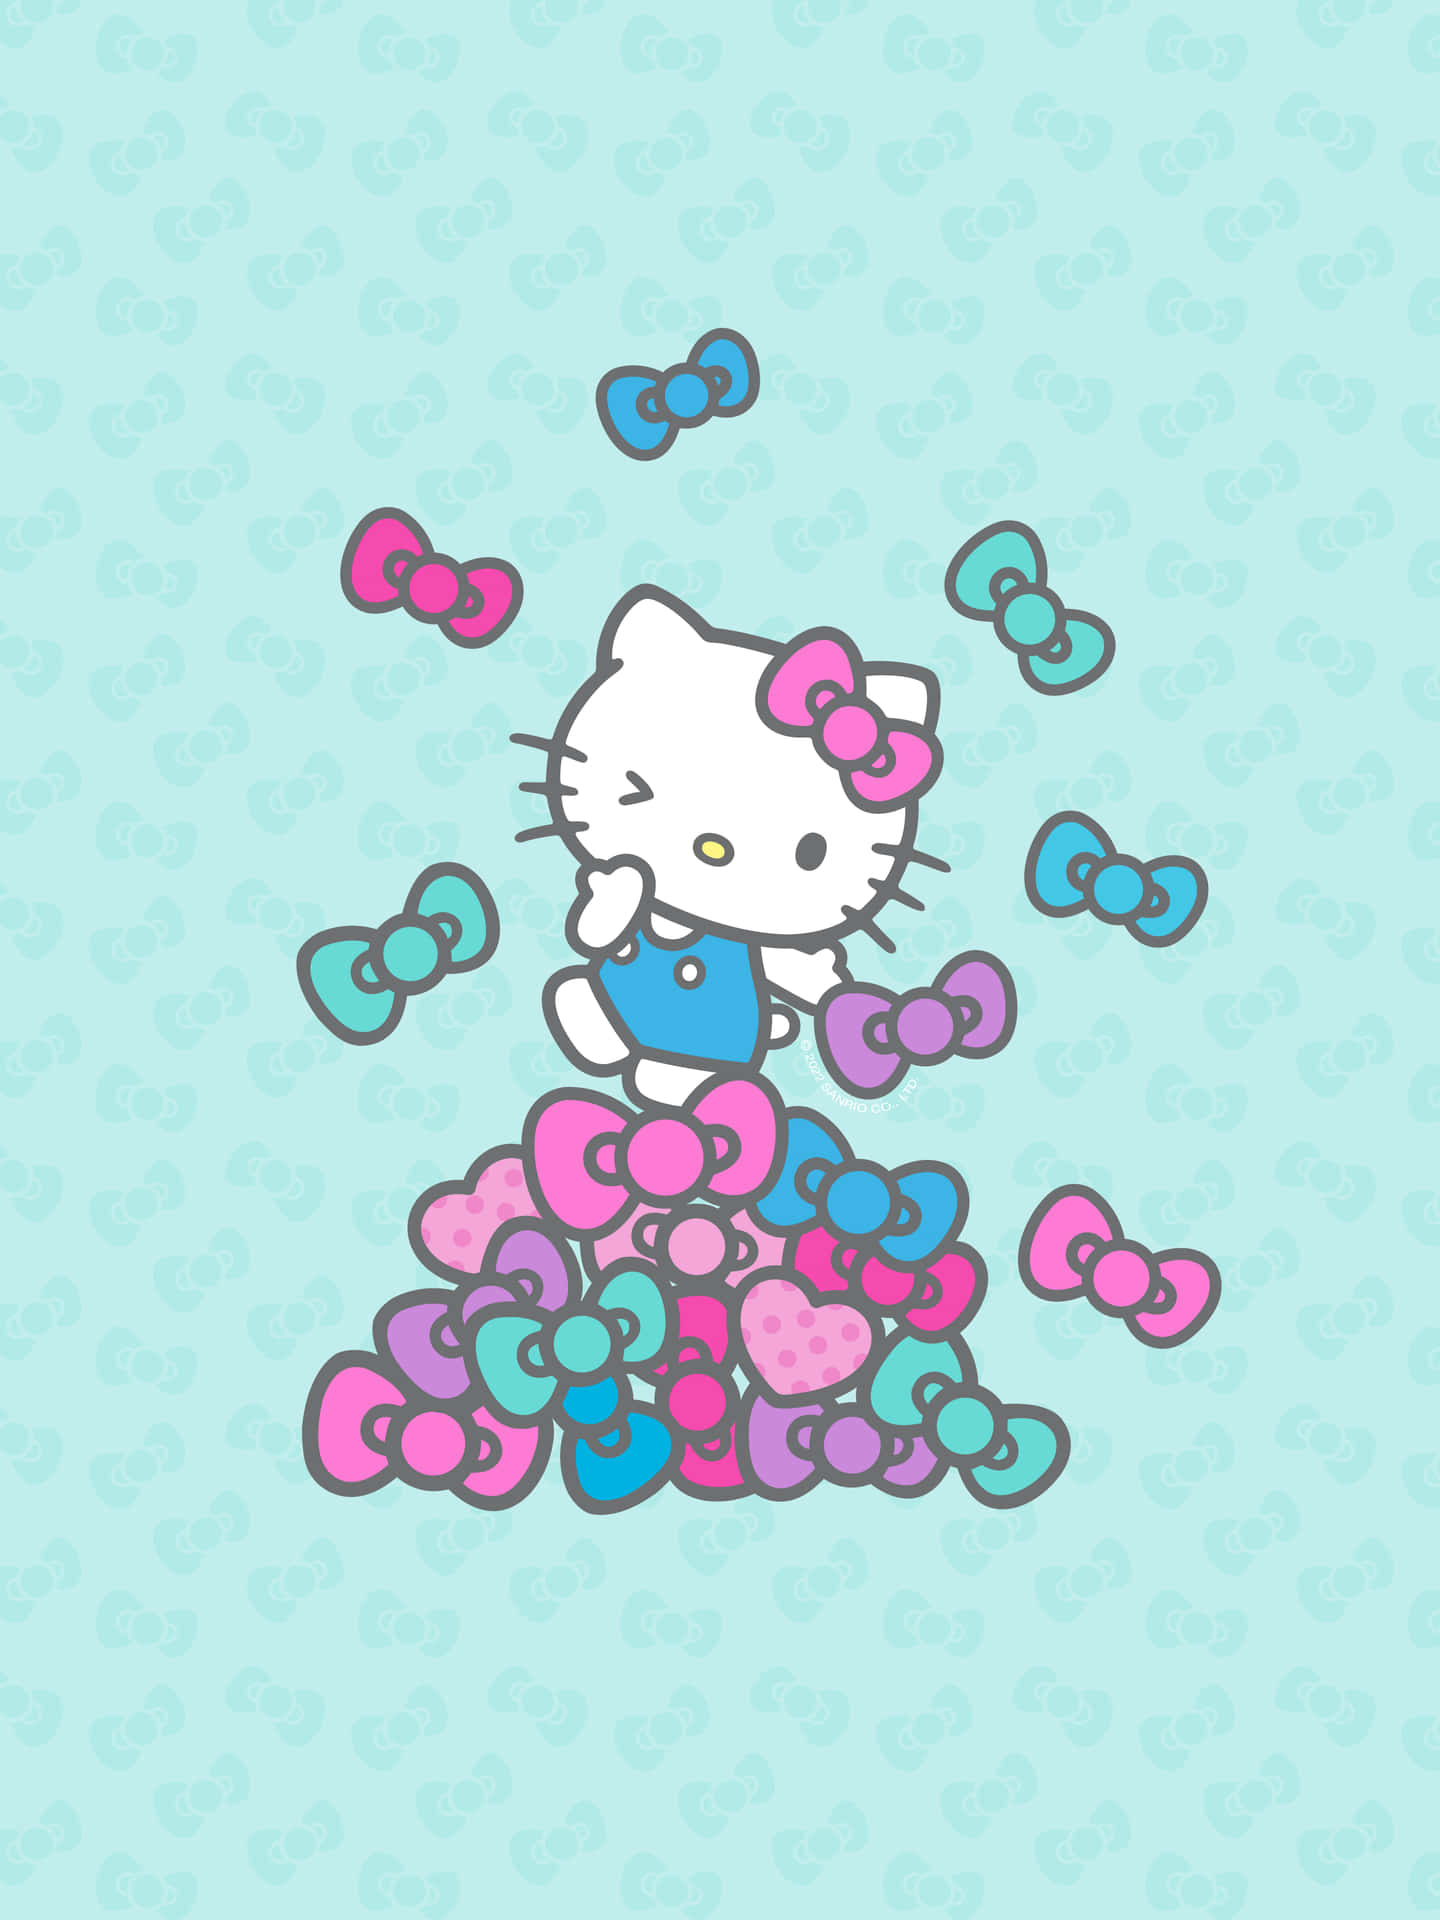 Fundode Tela Do Hello Kitty Em Azul E Rosa.